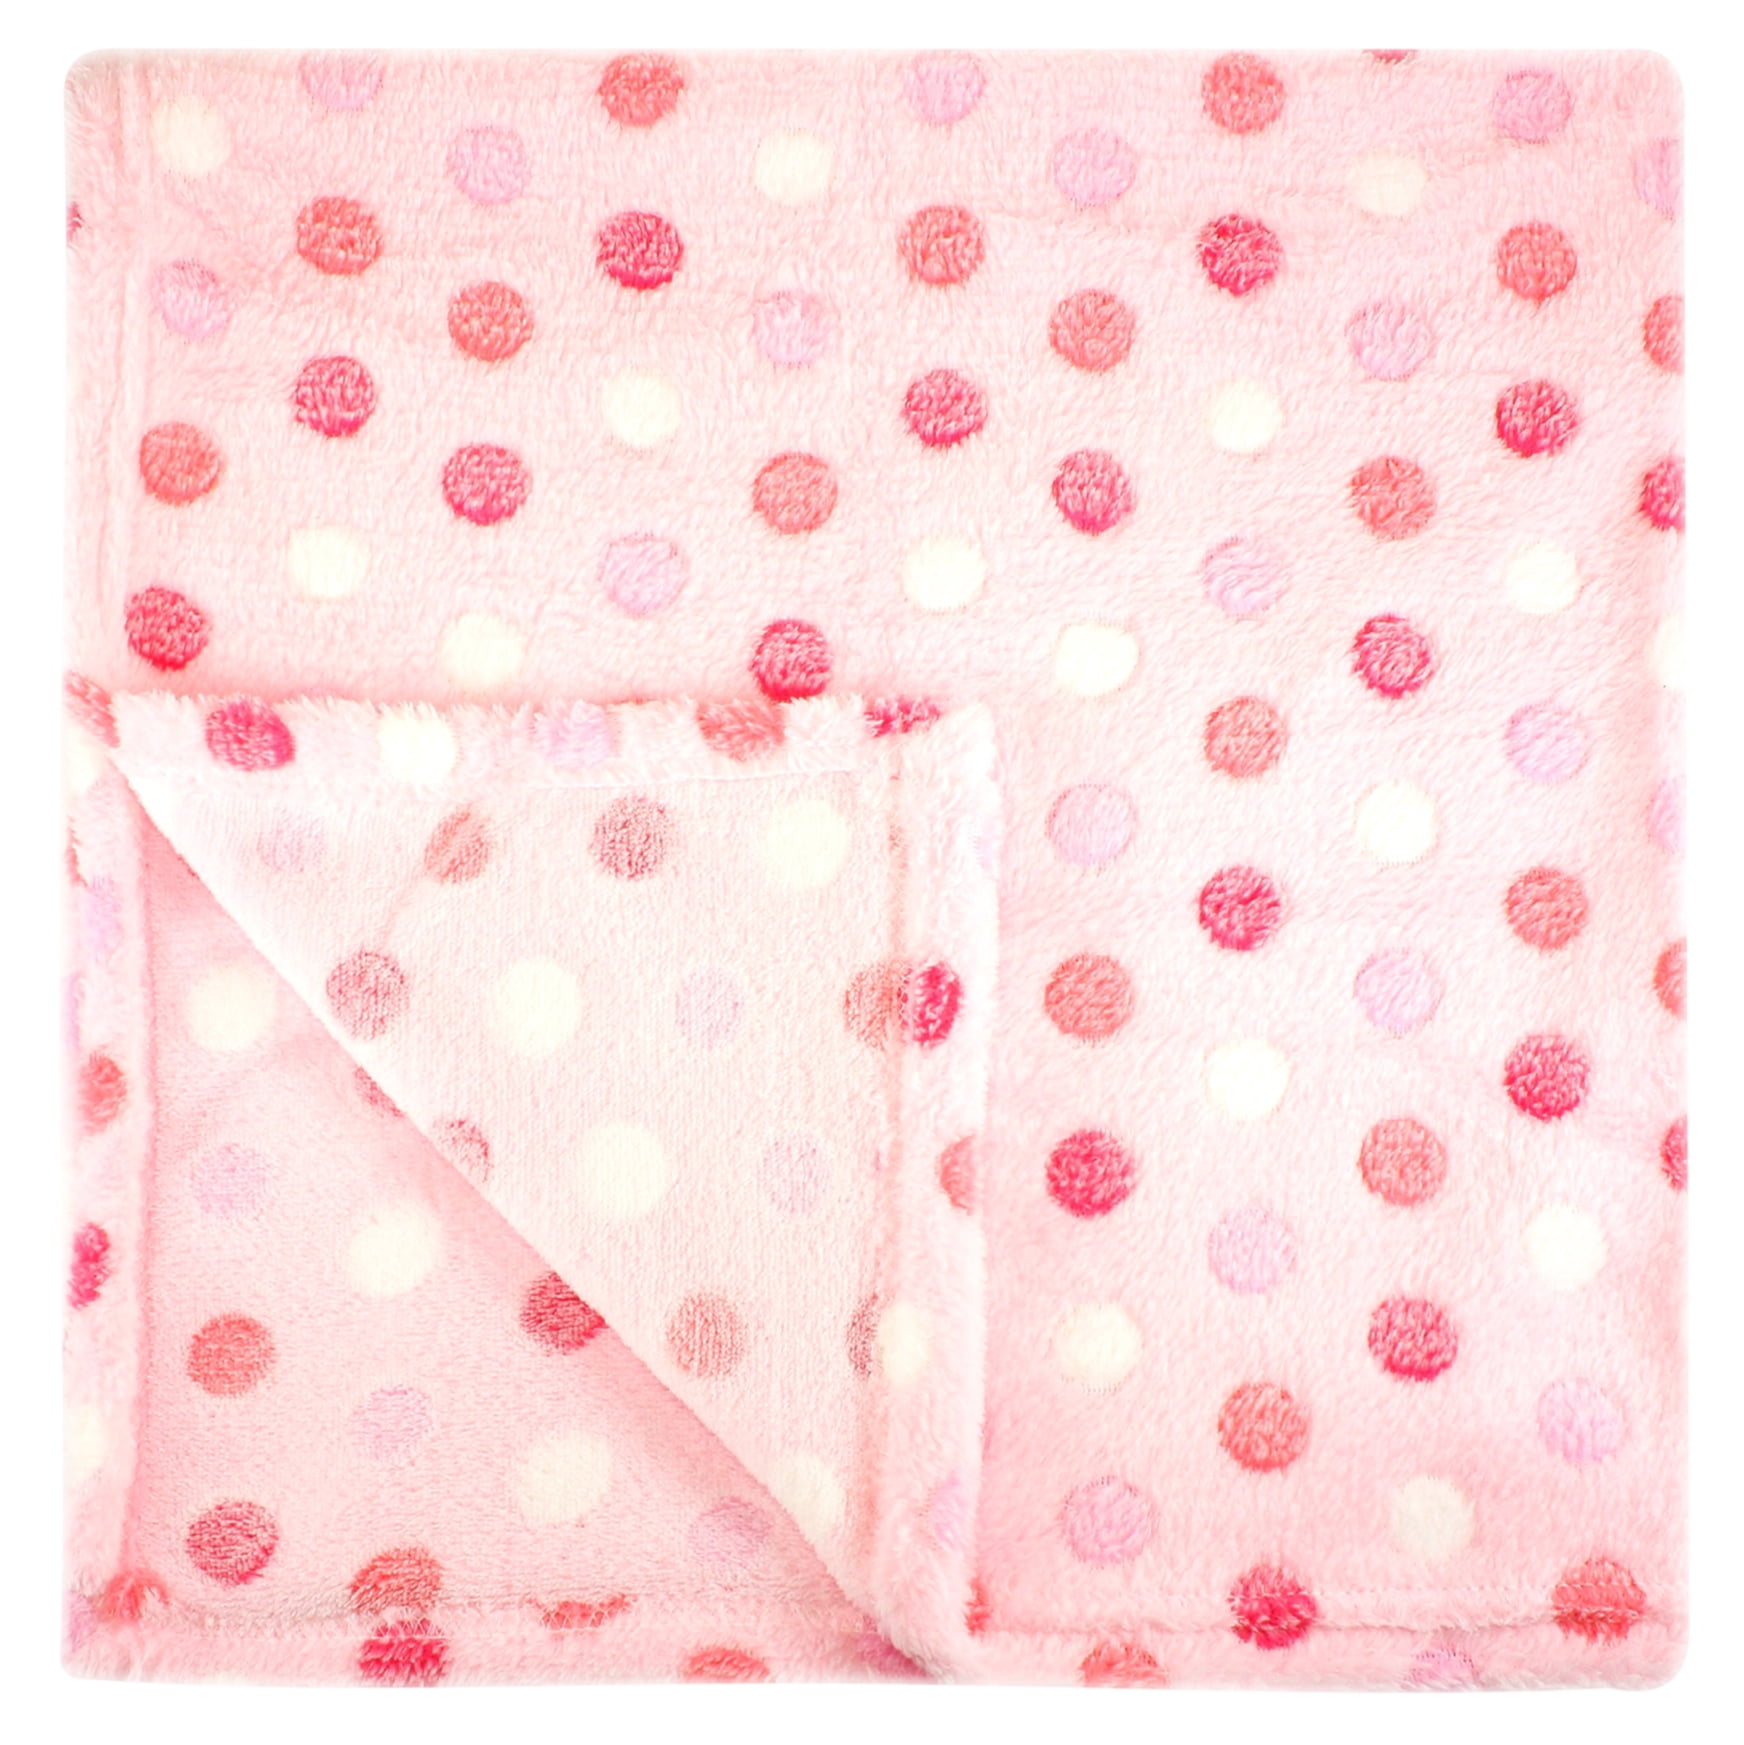 Orange 30x30 Inch Plush Fleece Baby Swaddle Blanket Assorted Unisex Colors Polka Dot Blankets For Receiving Newborns by bogo Brands NA 